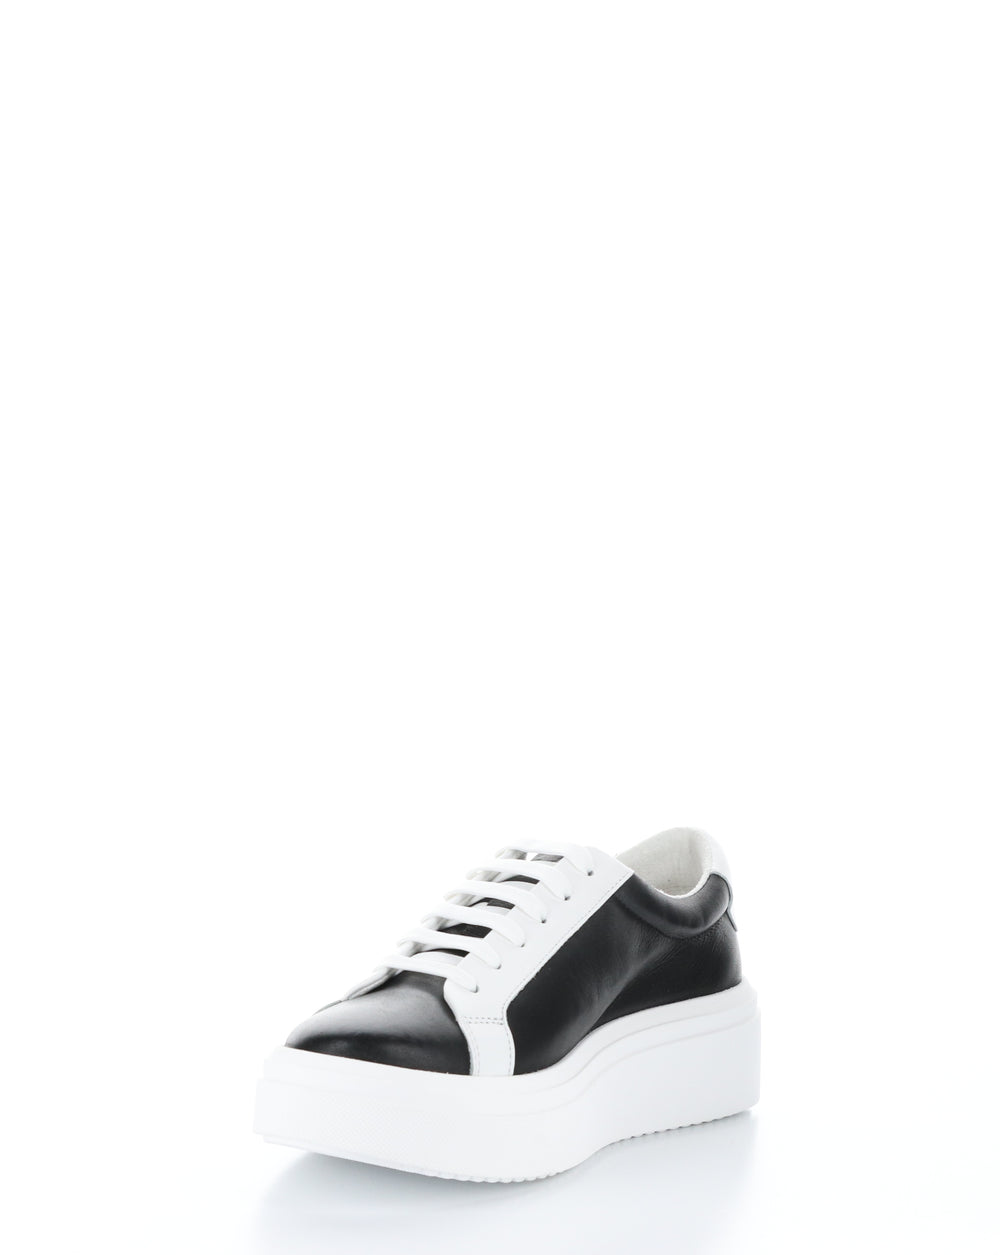 FUZI BLACK/WHITE Lace-up Shoes